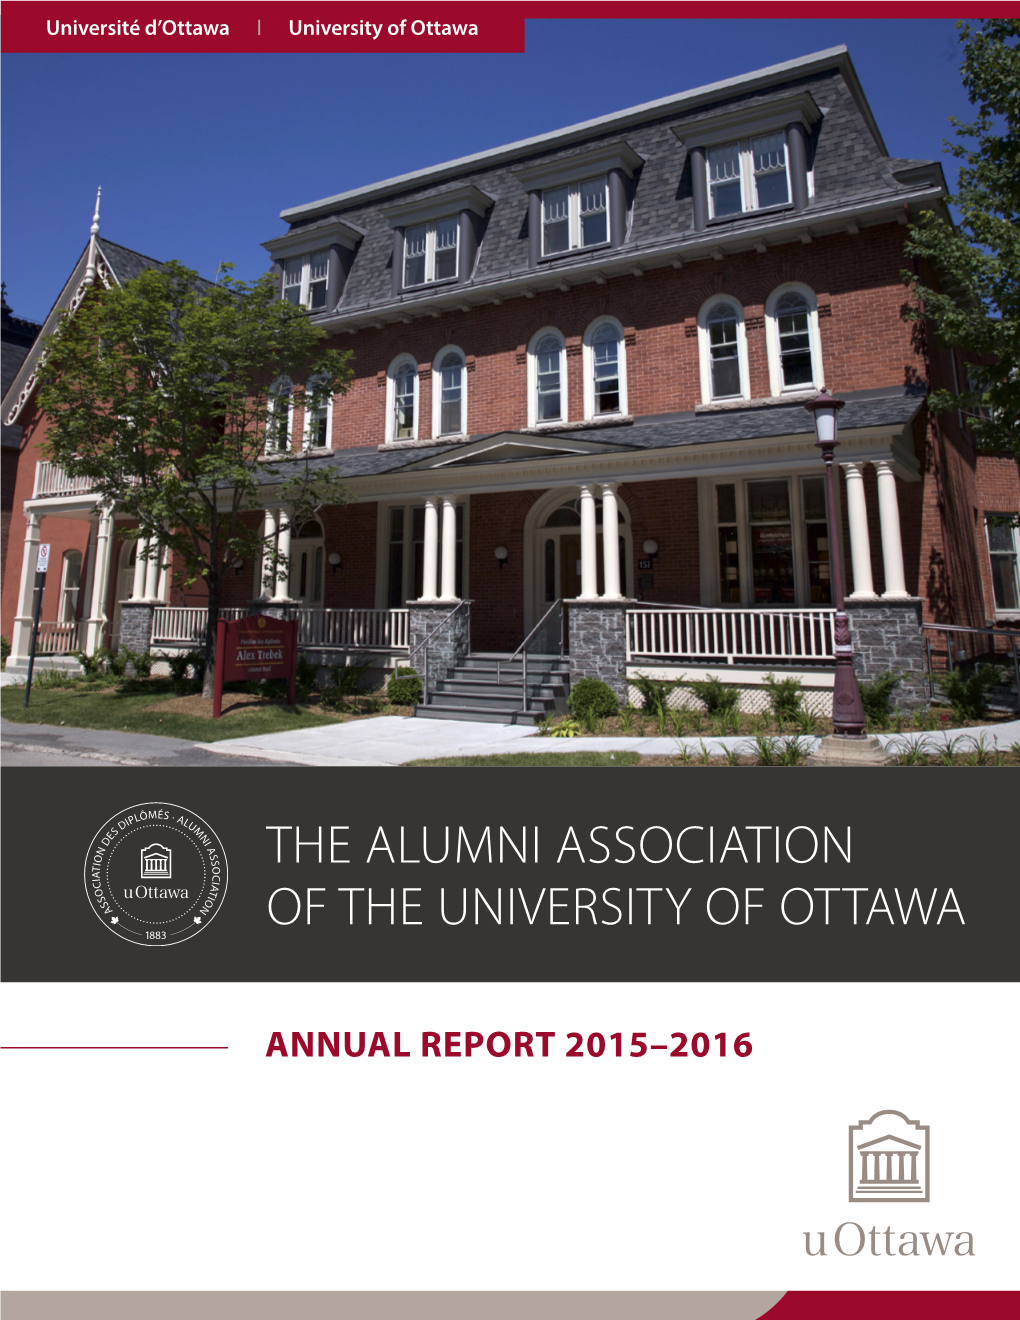 The Alumni Association of the University of Ottawa